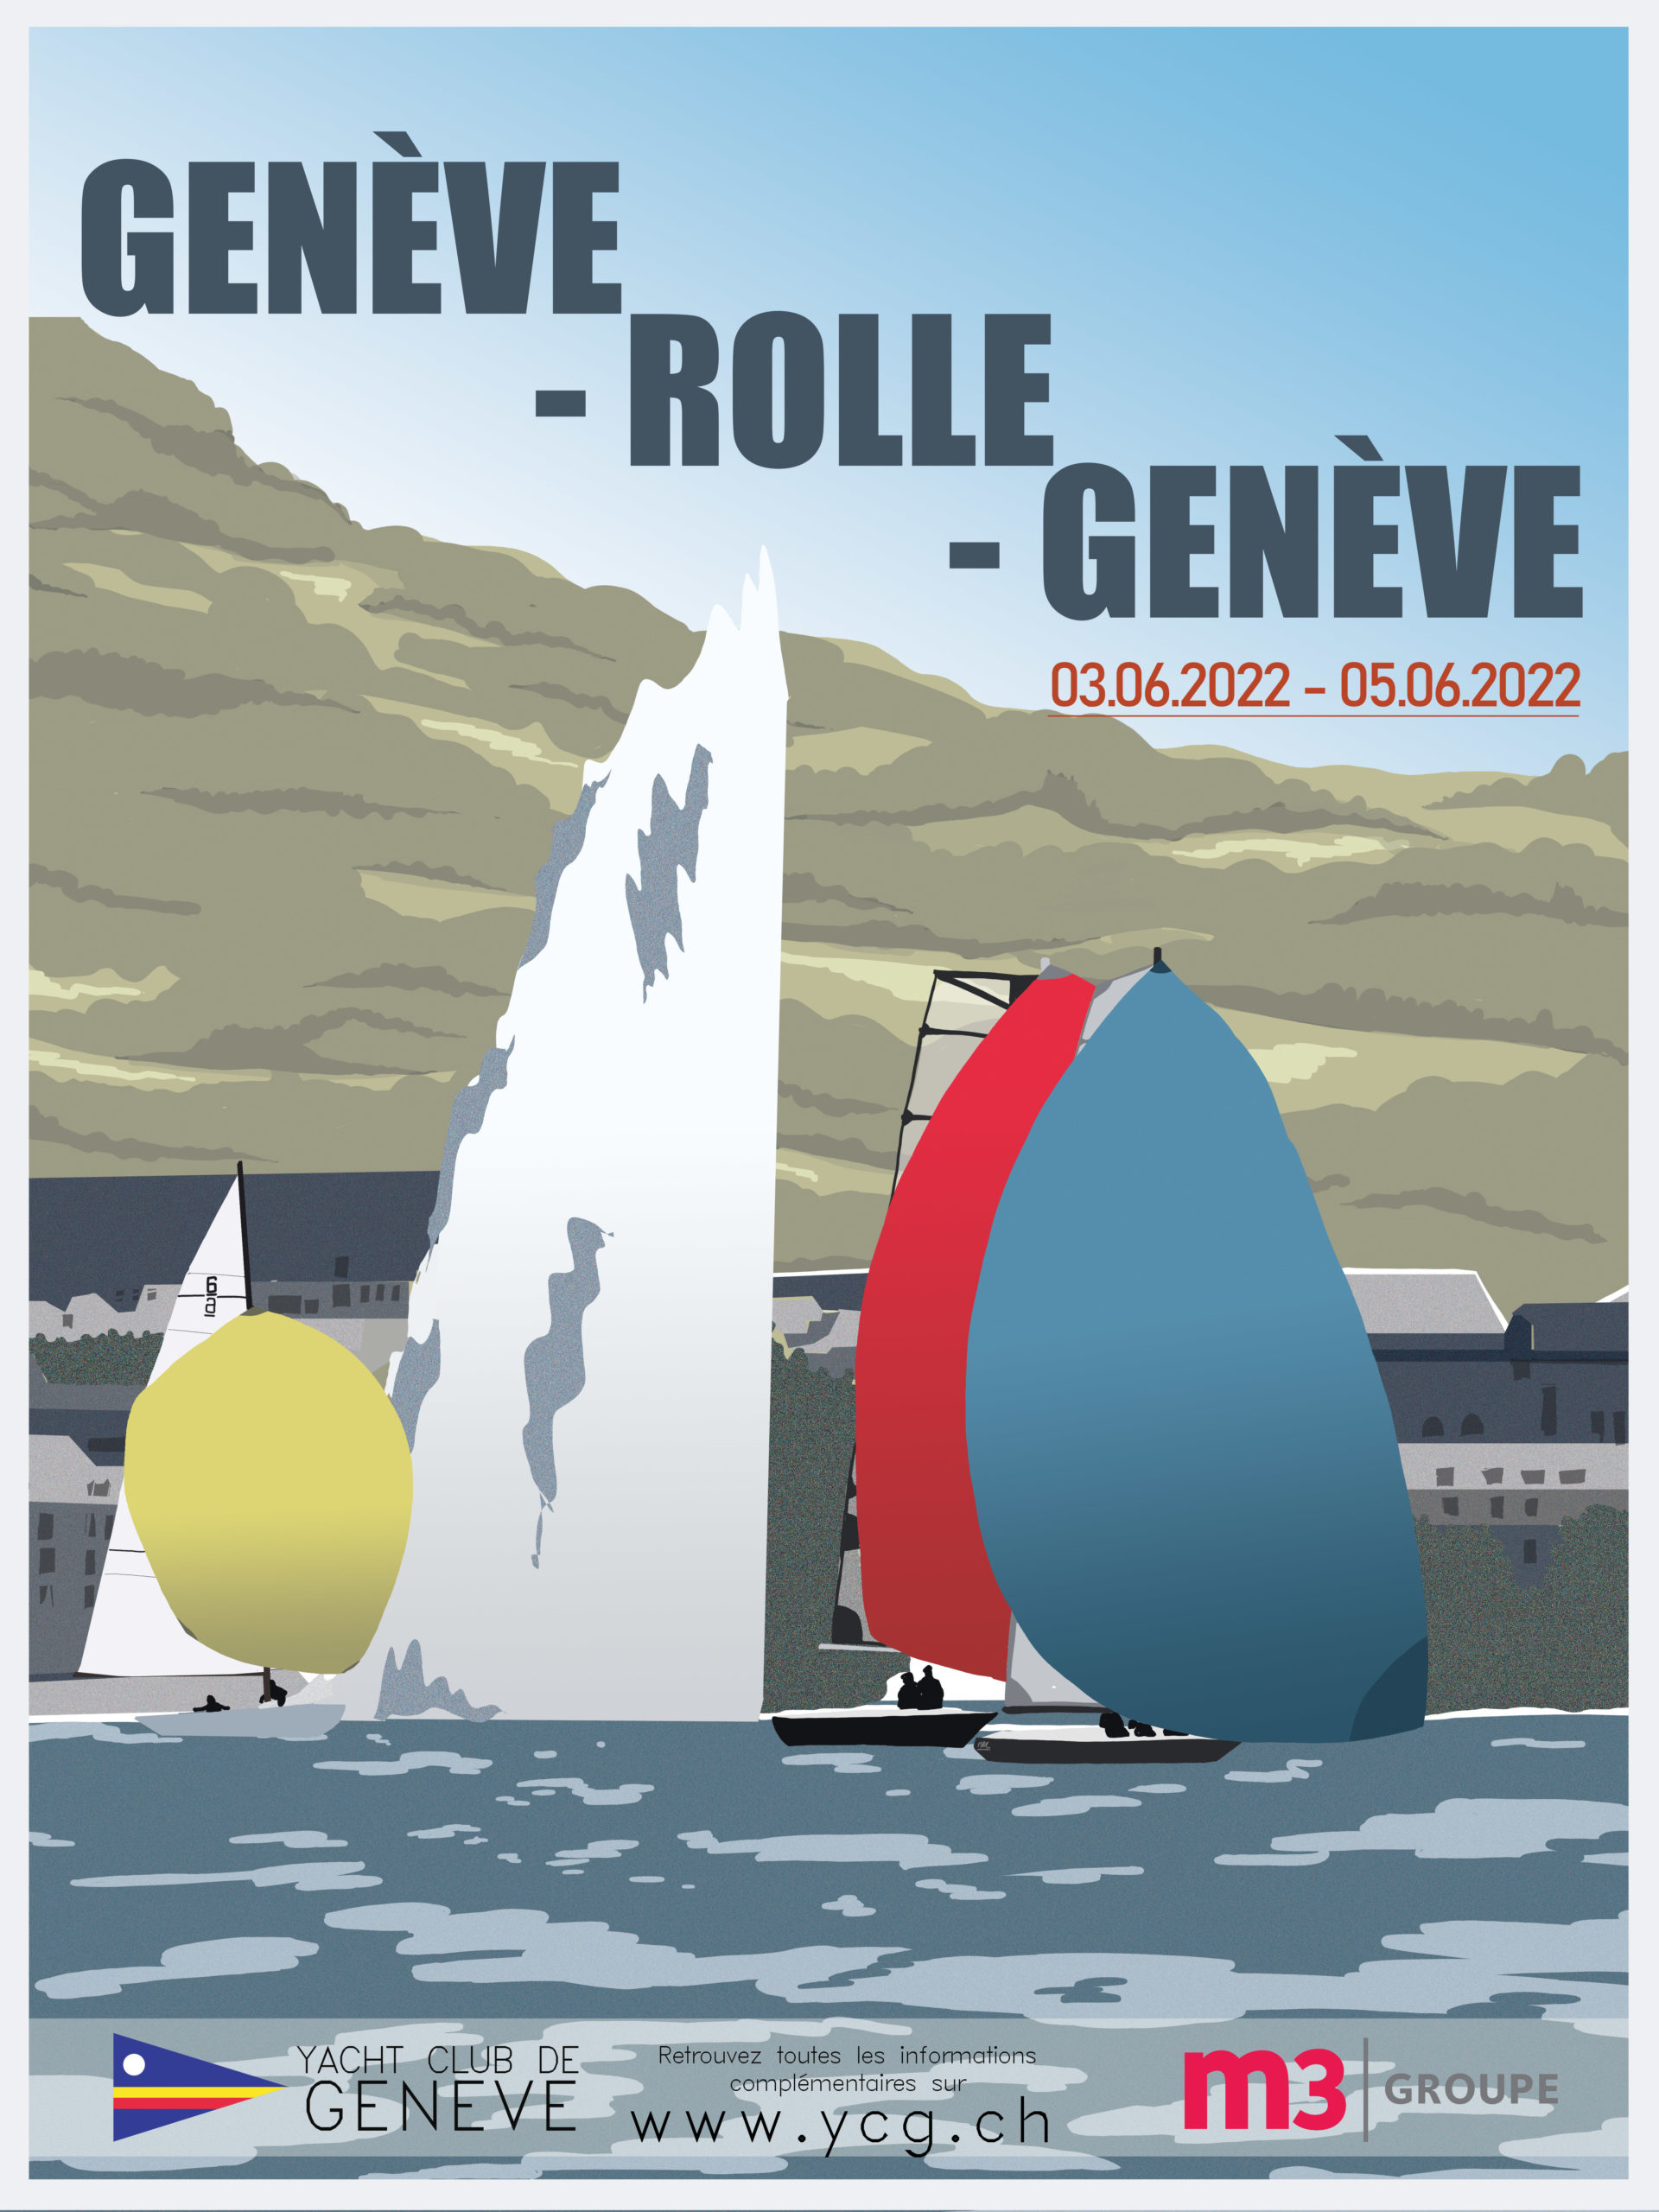  SRS  GeneveRolleGeneve  YC Geneve  Start at 13h CET